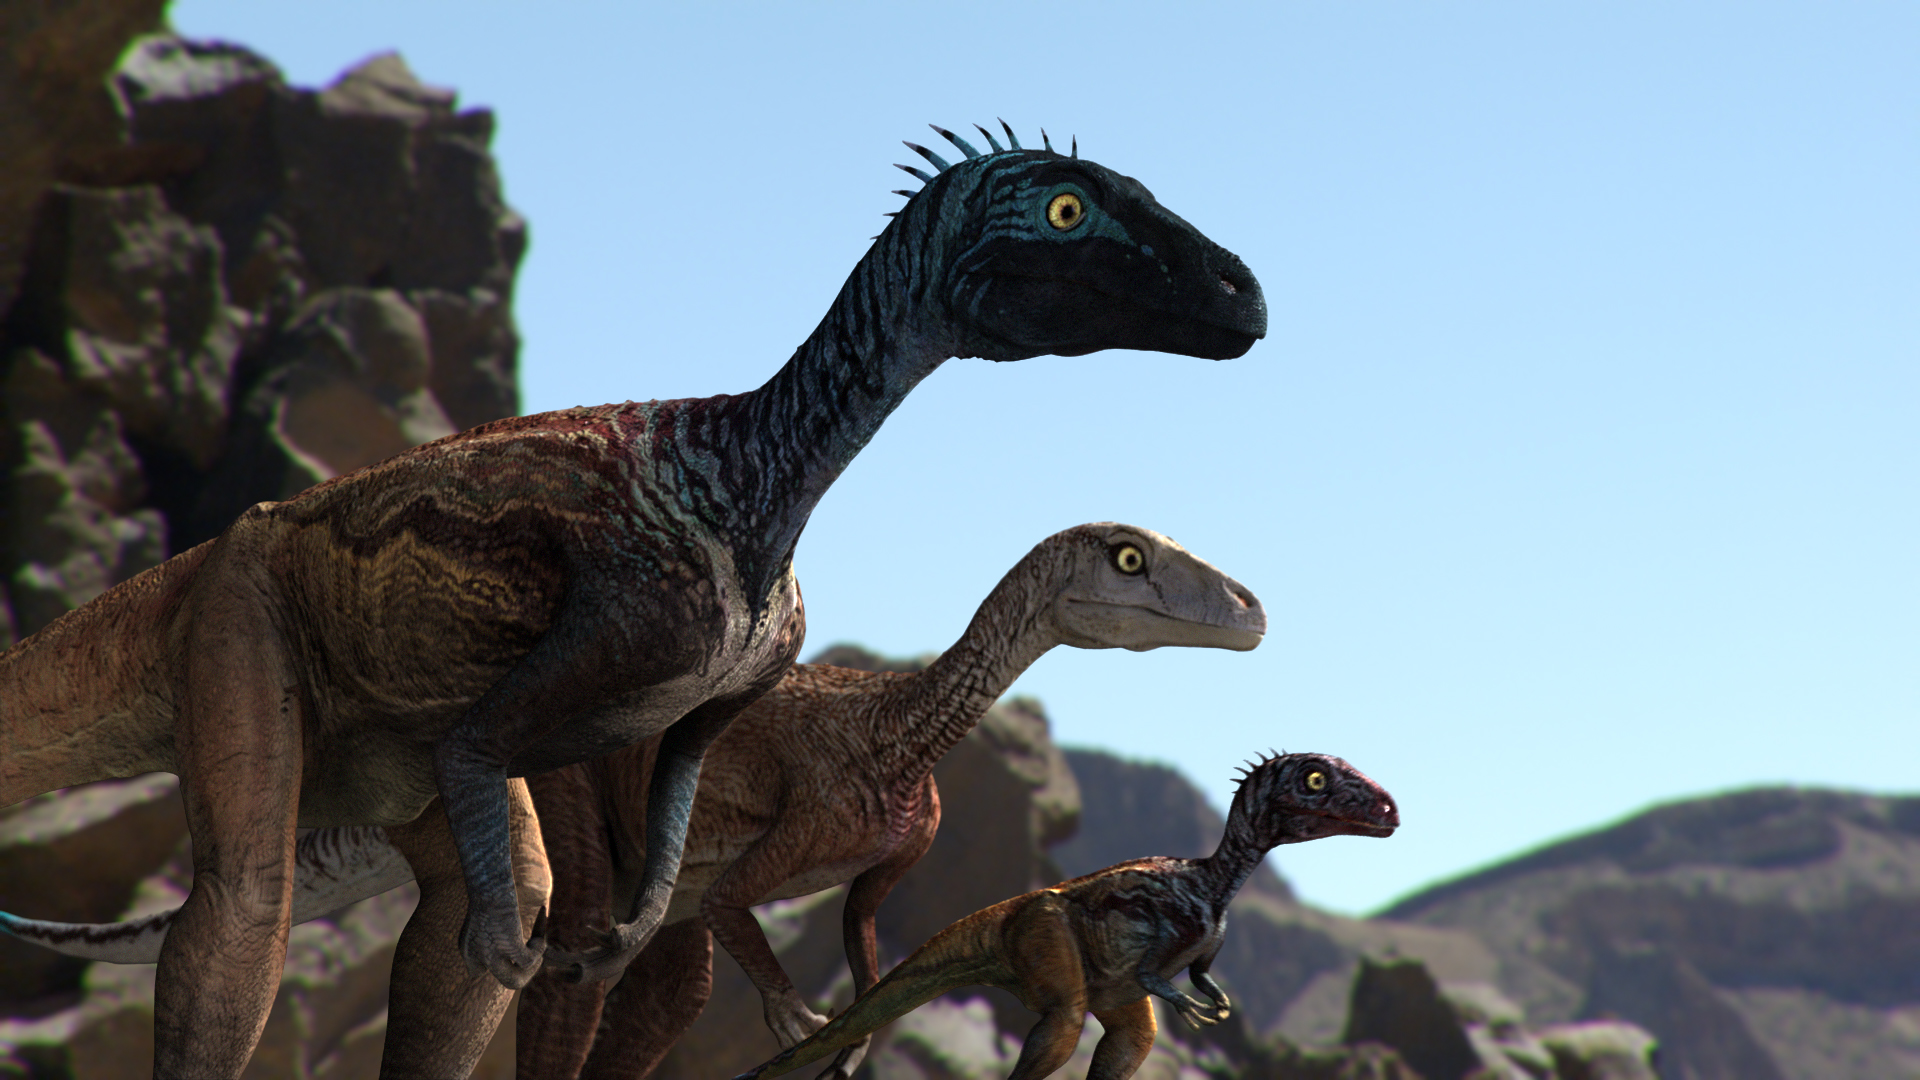 Scoala Discovery deschide "Targul de dinozauri"!